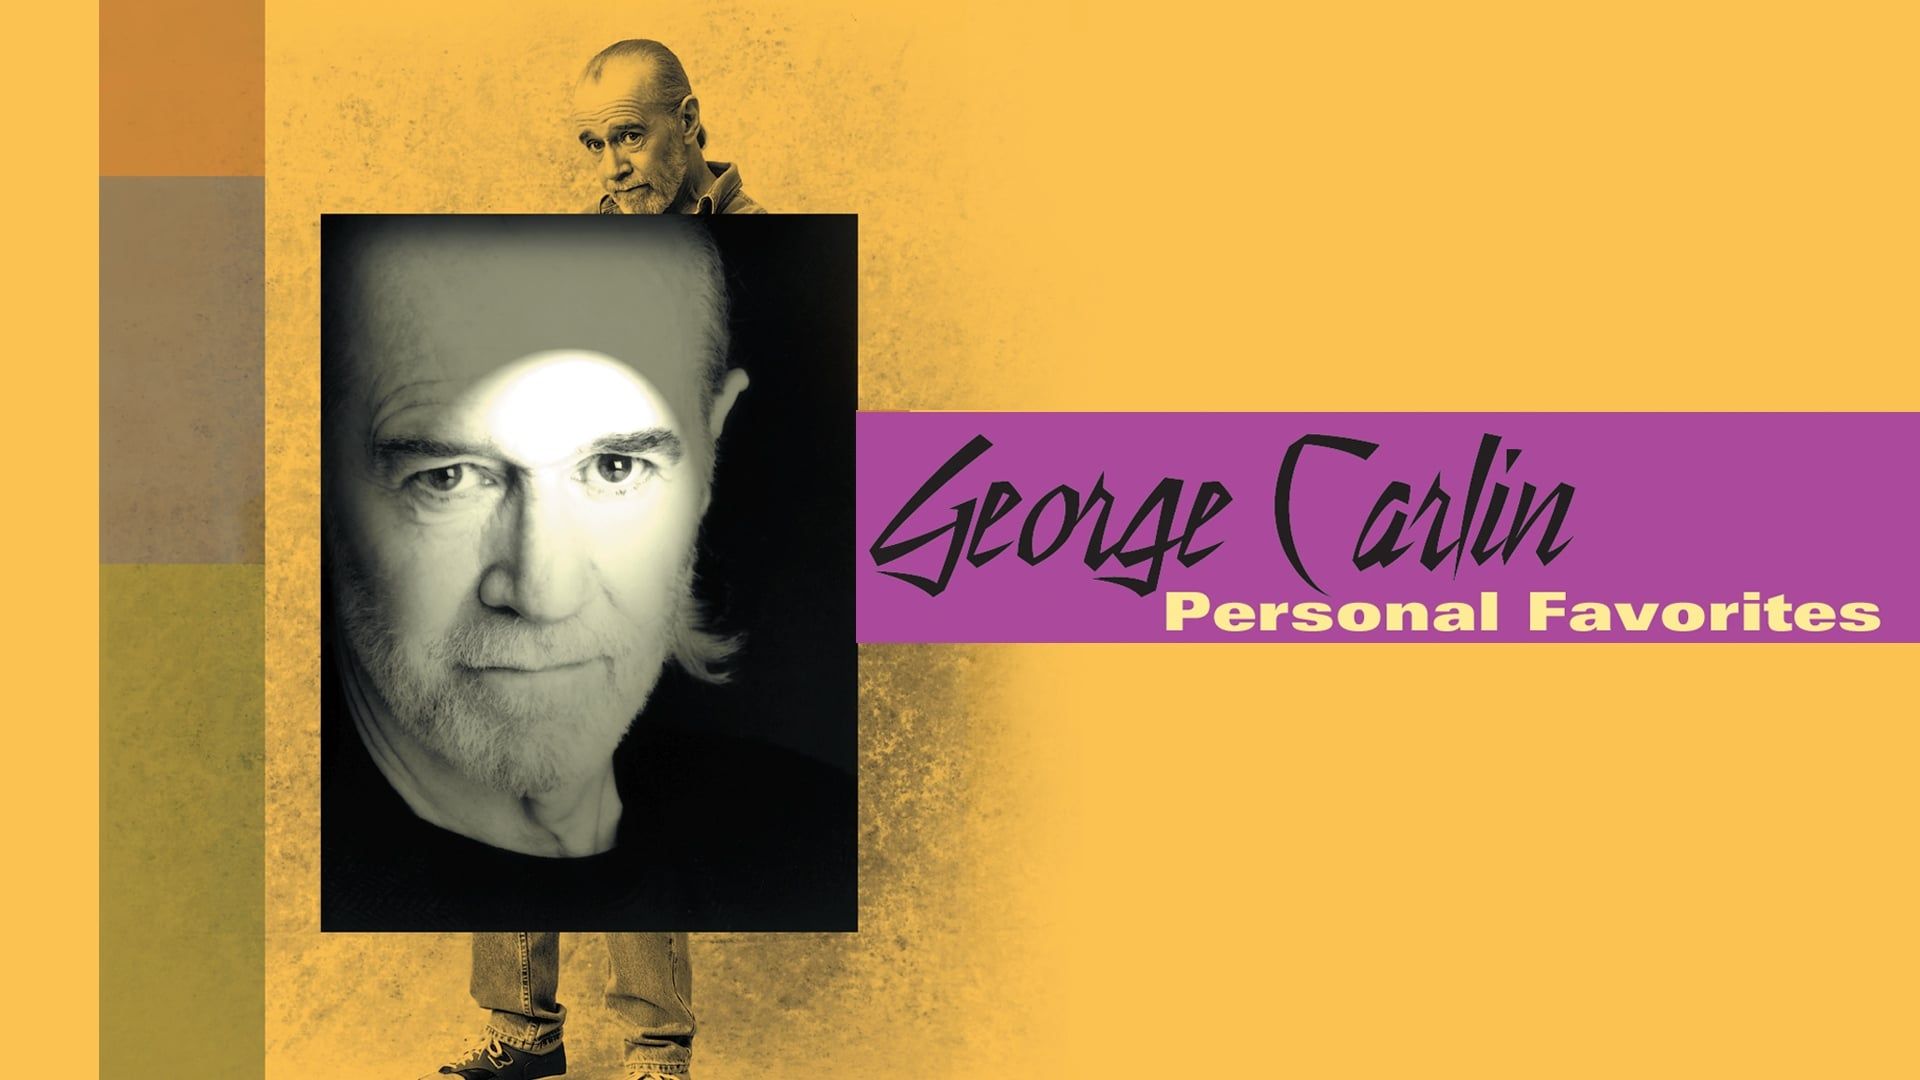 George Carlin: Personal Favorites background